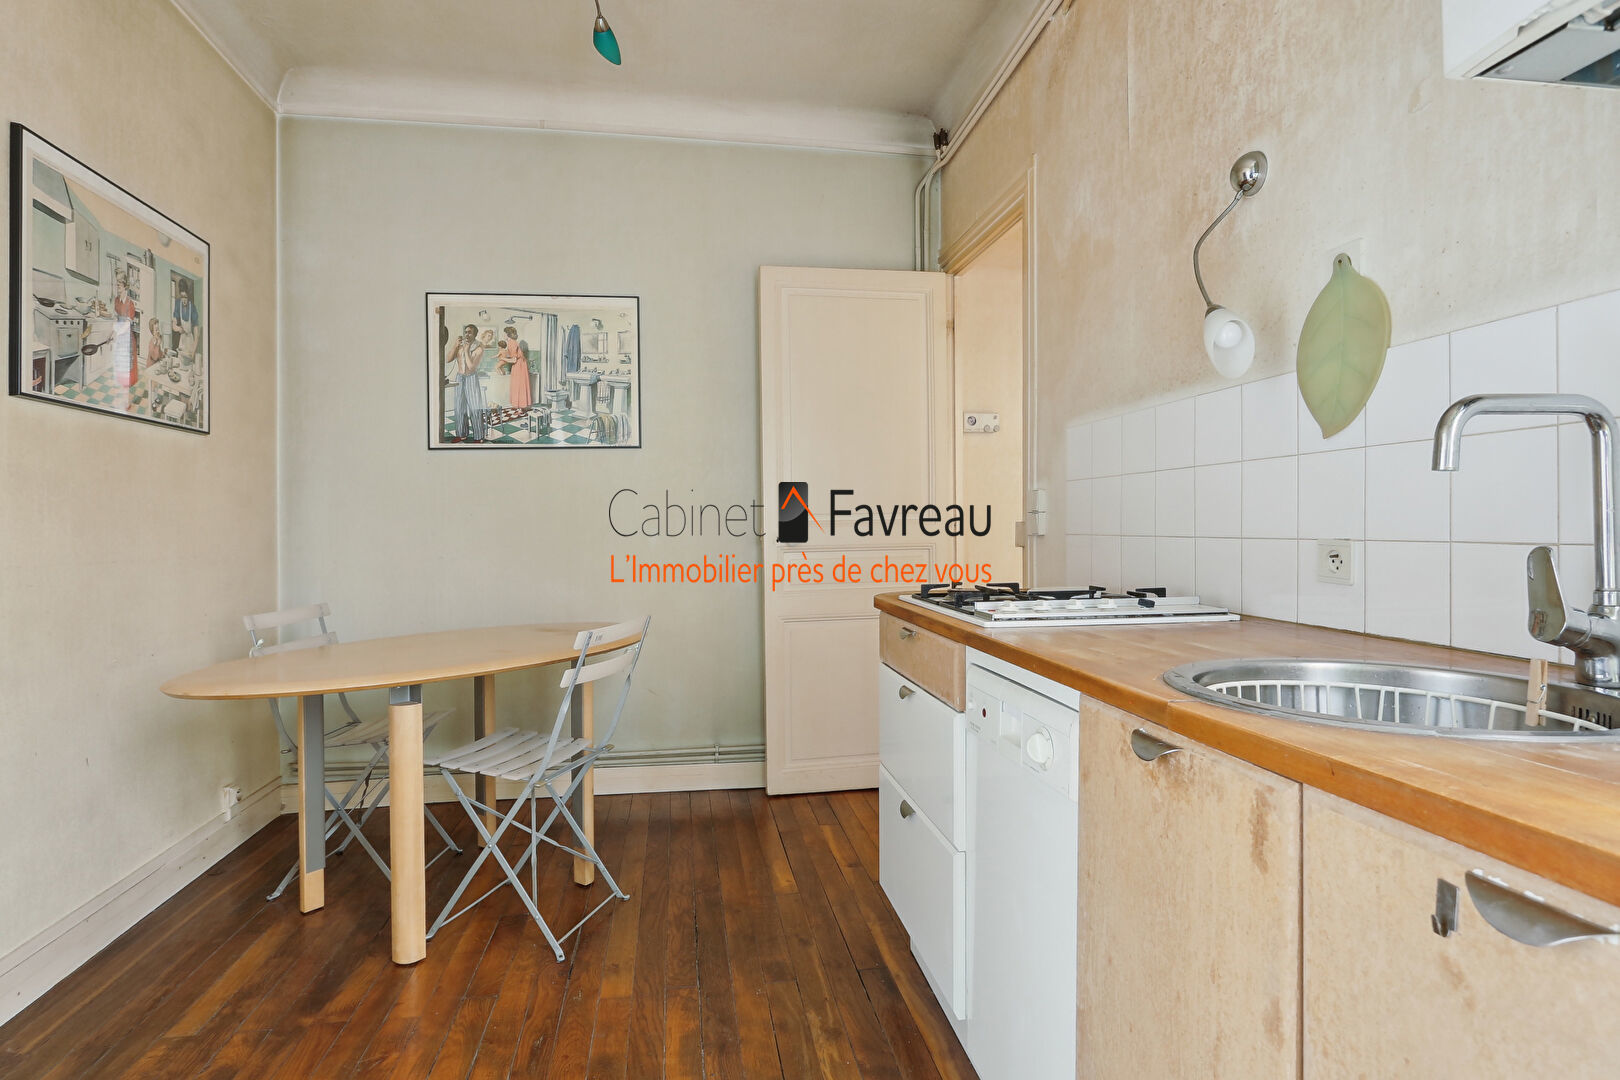 Appartement a louer malakoff - 4 pièce(s) - 88.55 m2 - Surfyn